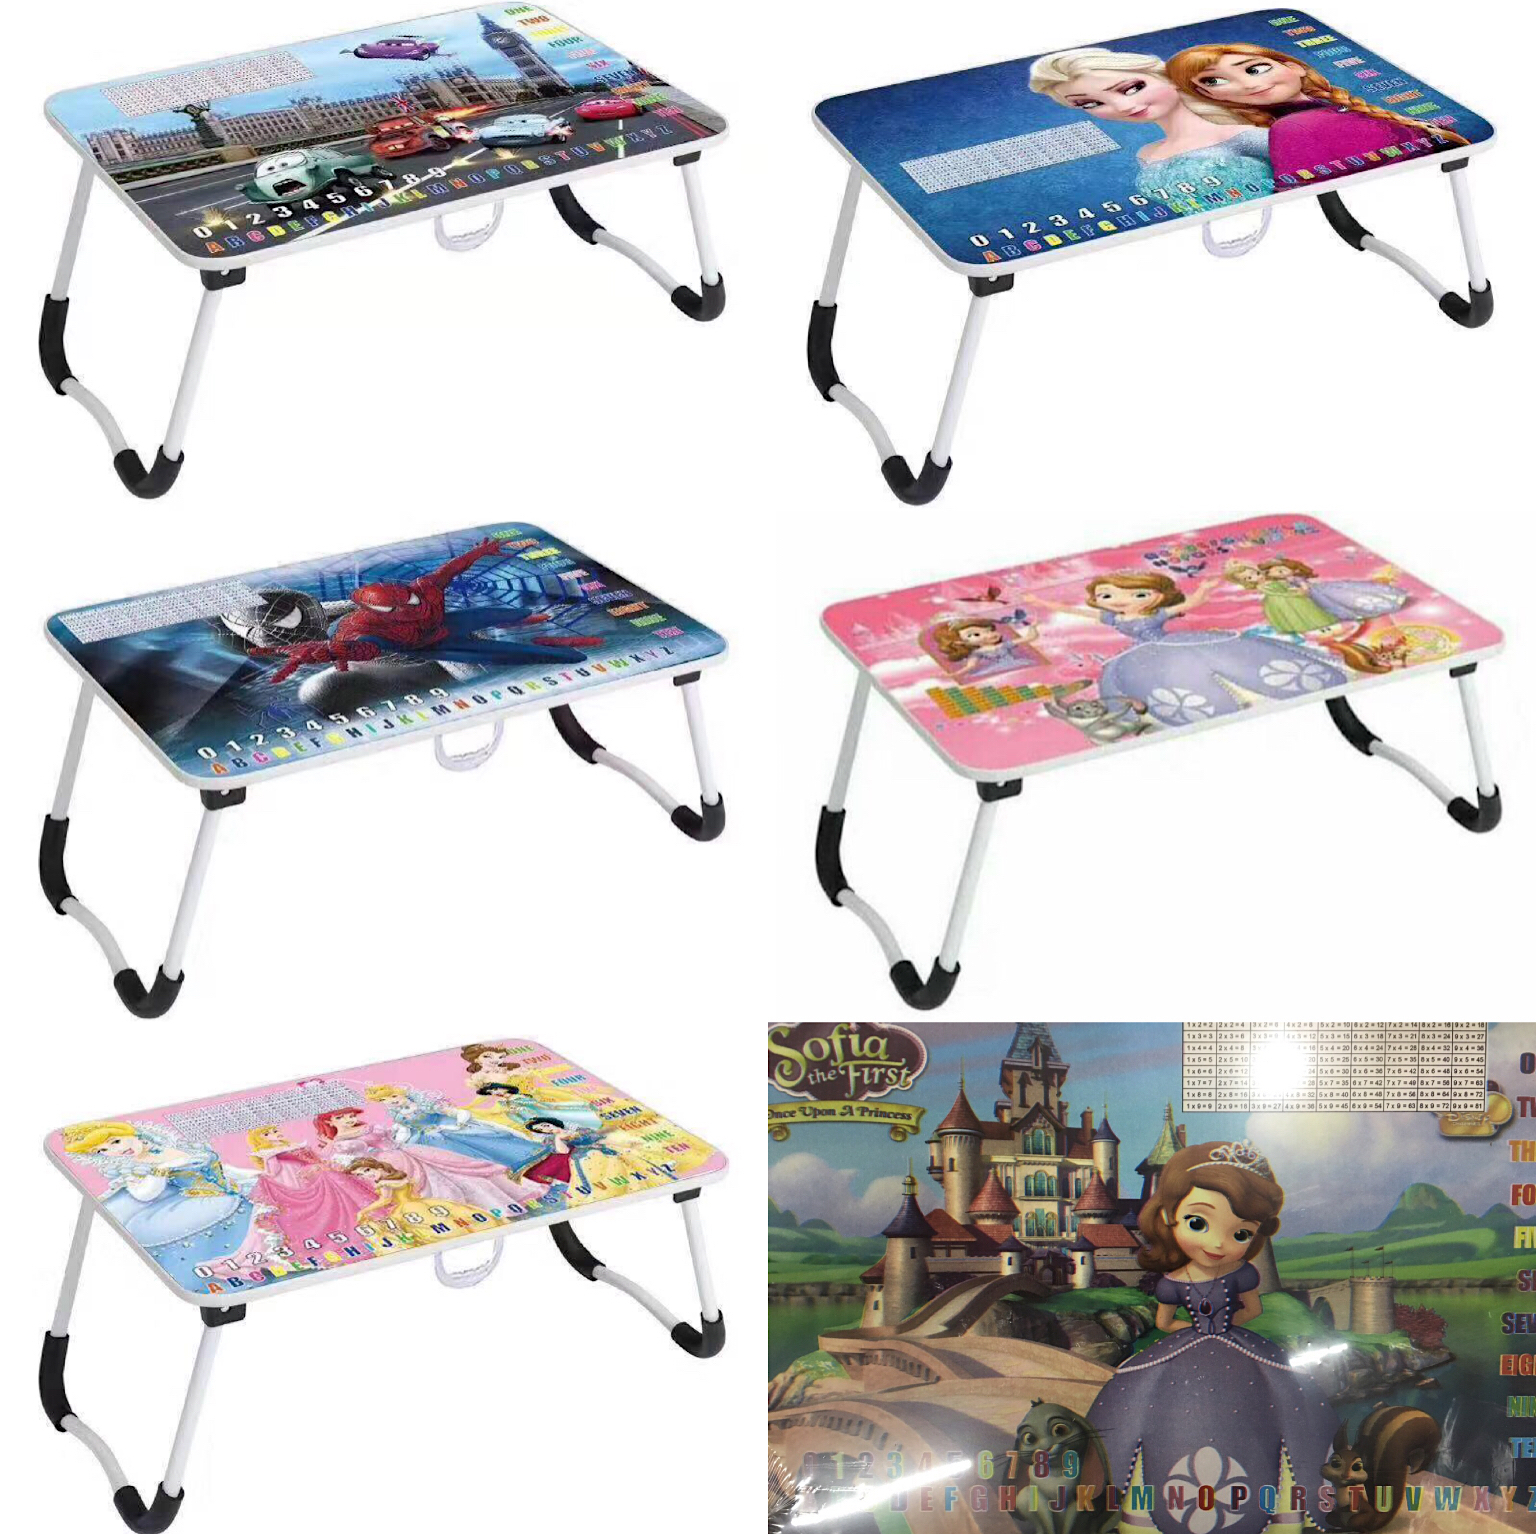 small kids folding table